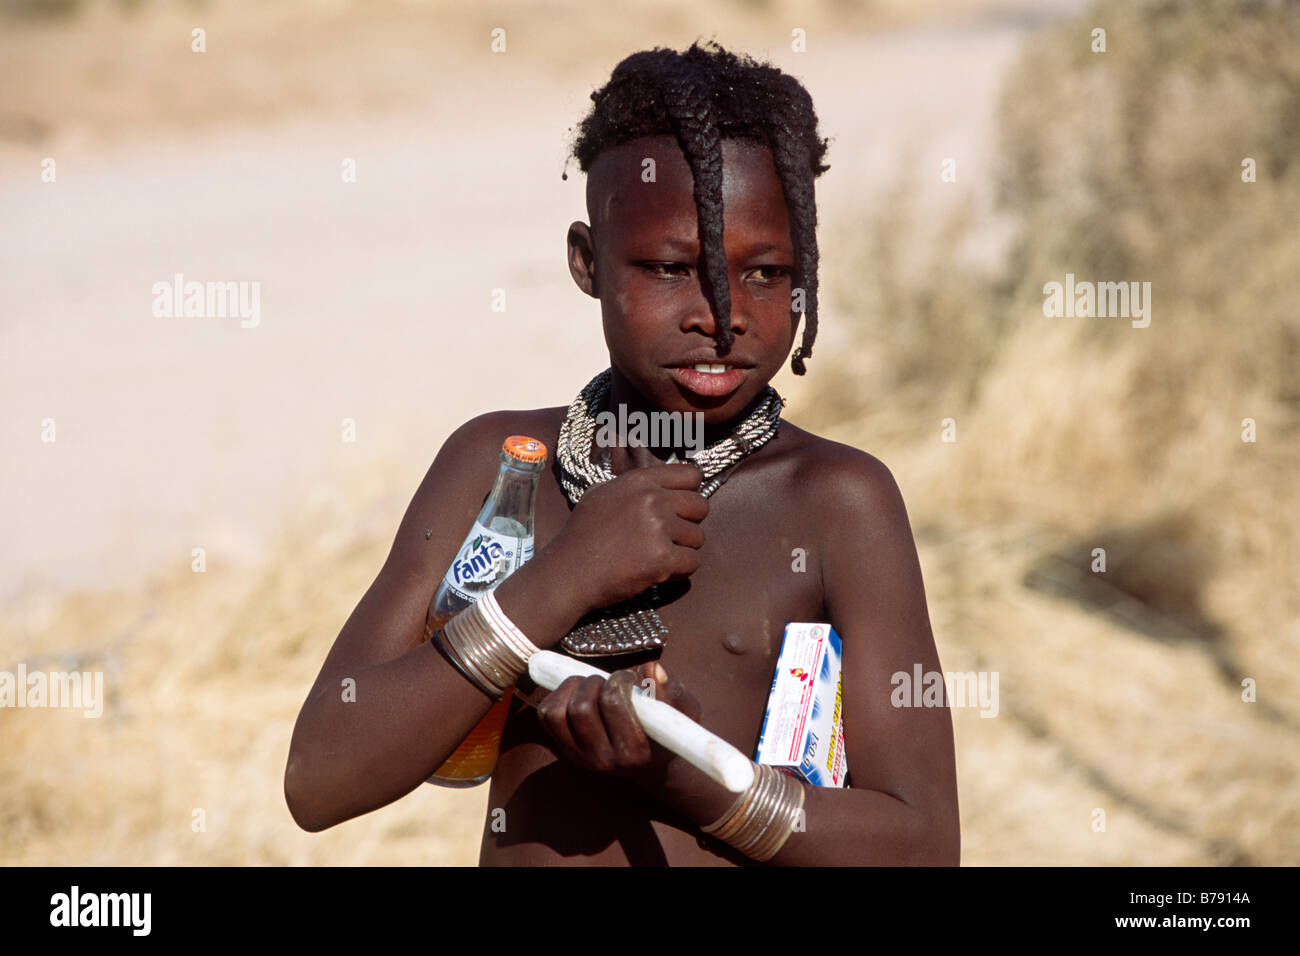 Himba girl teniendo productos de la civilización occidental, retrato, Kaokoveld, Namibia, África Foto de stock